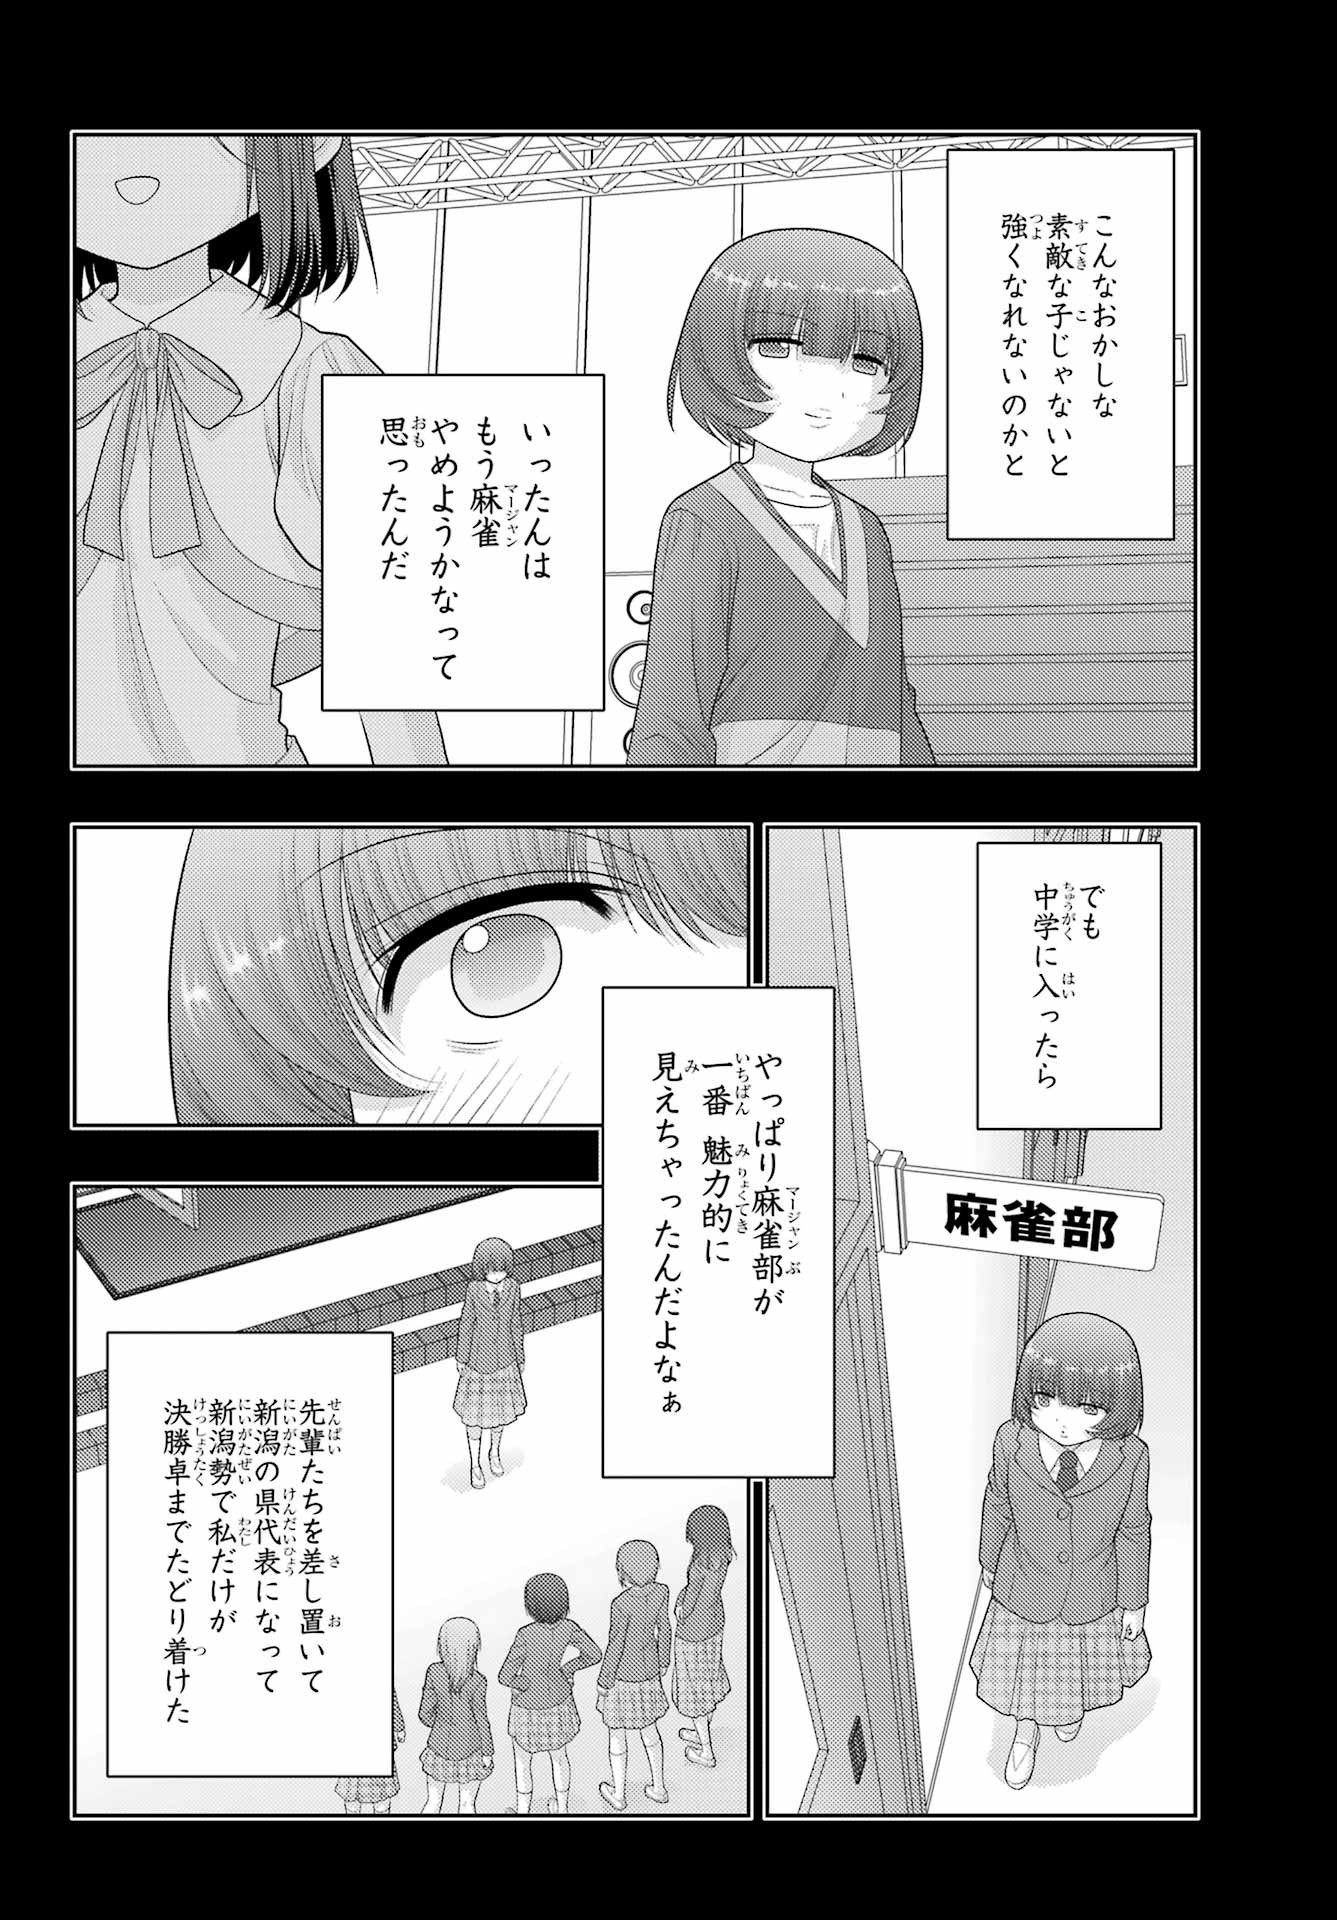 Shinohayu - The Dawn of Age Manga - Chapter 100 - Page 4